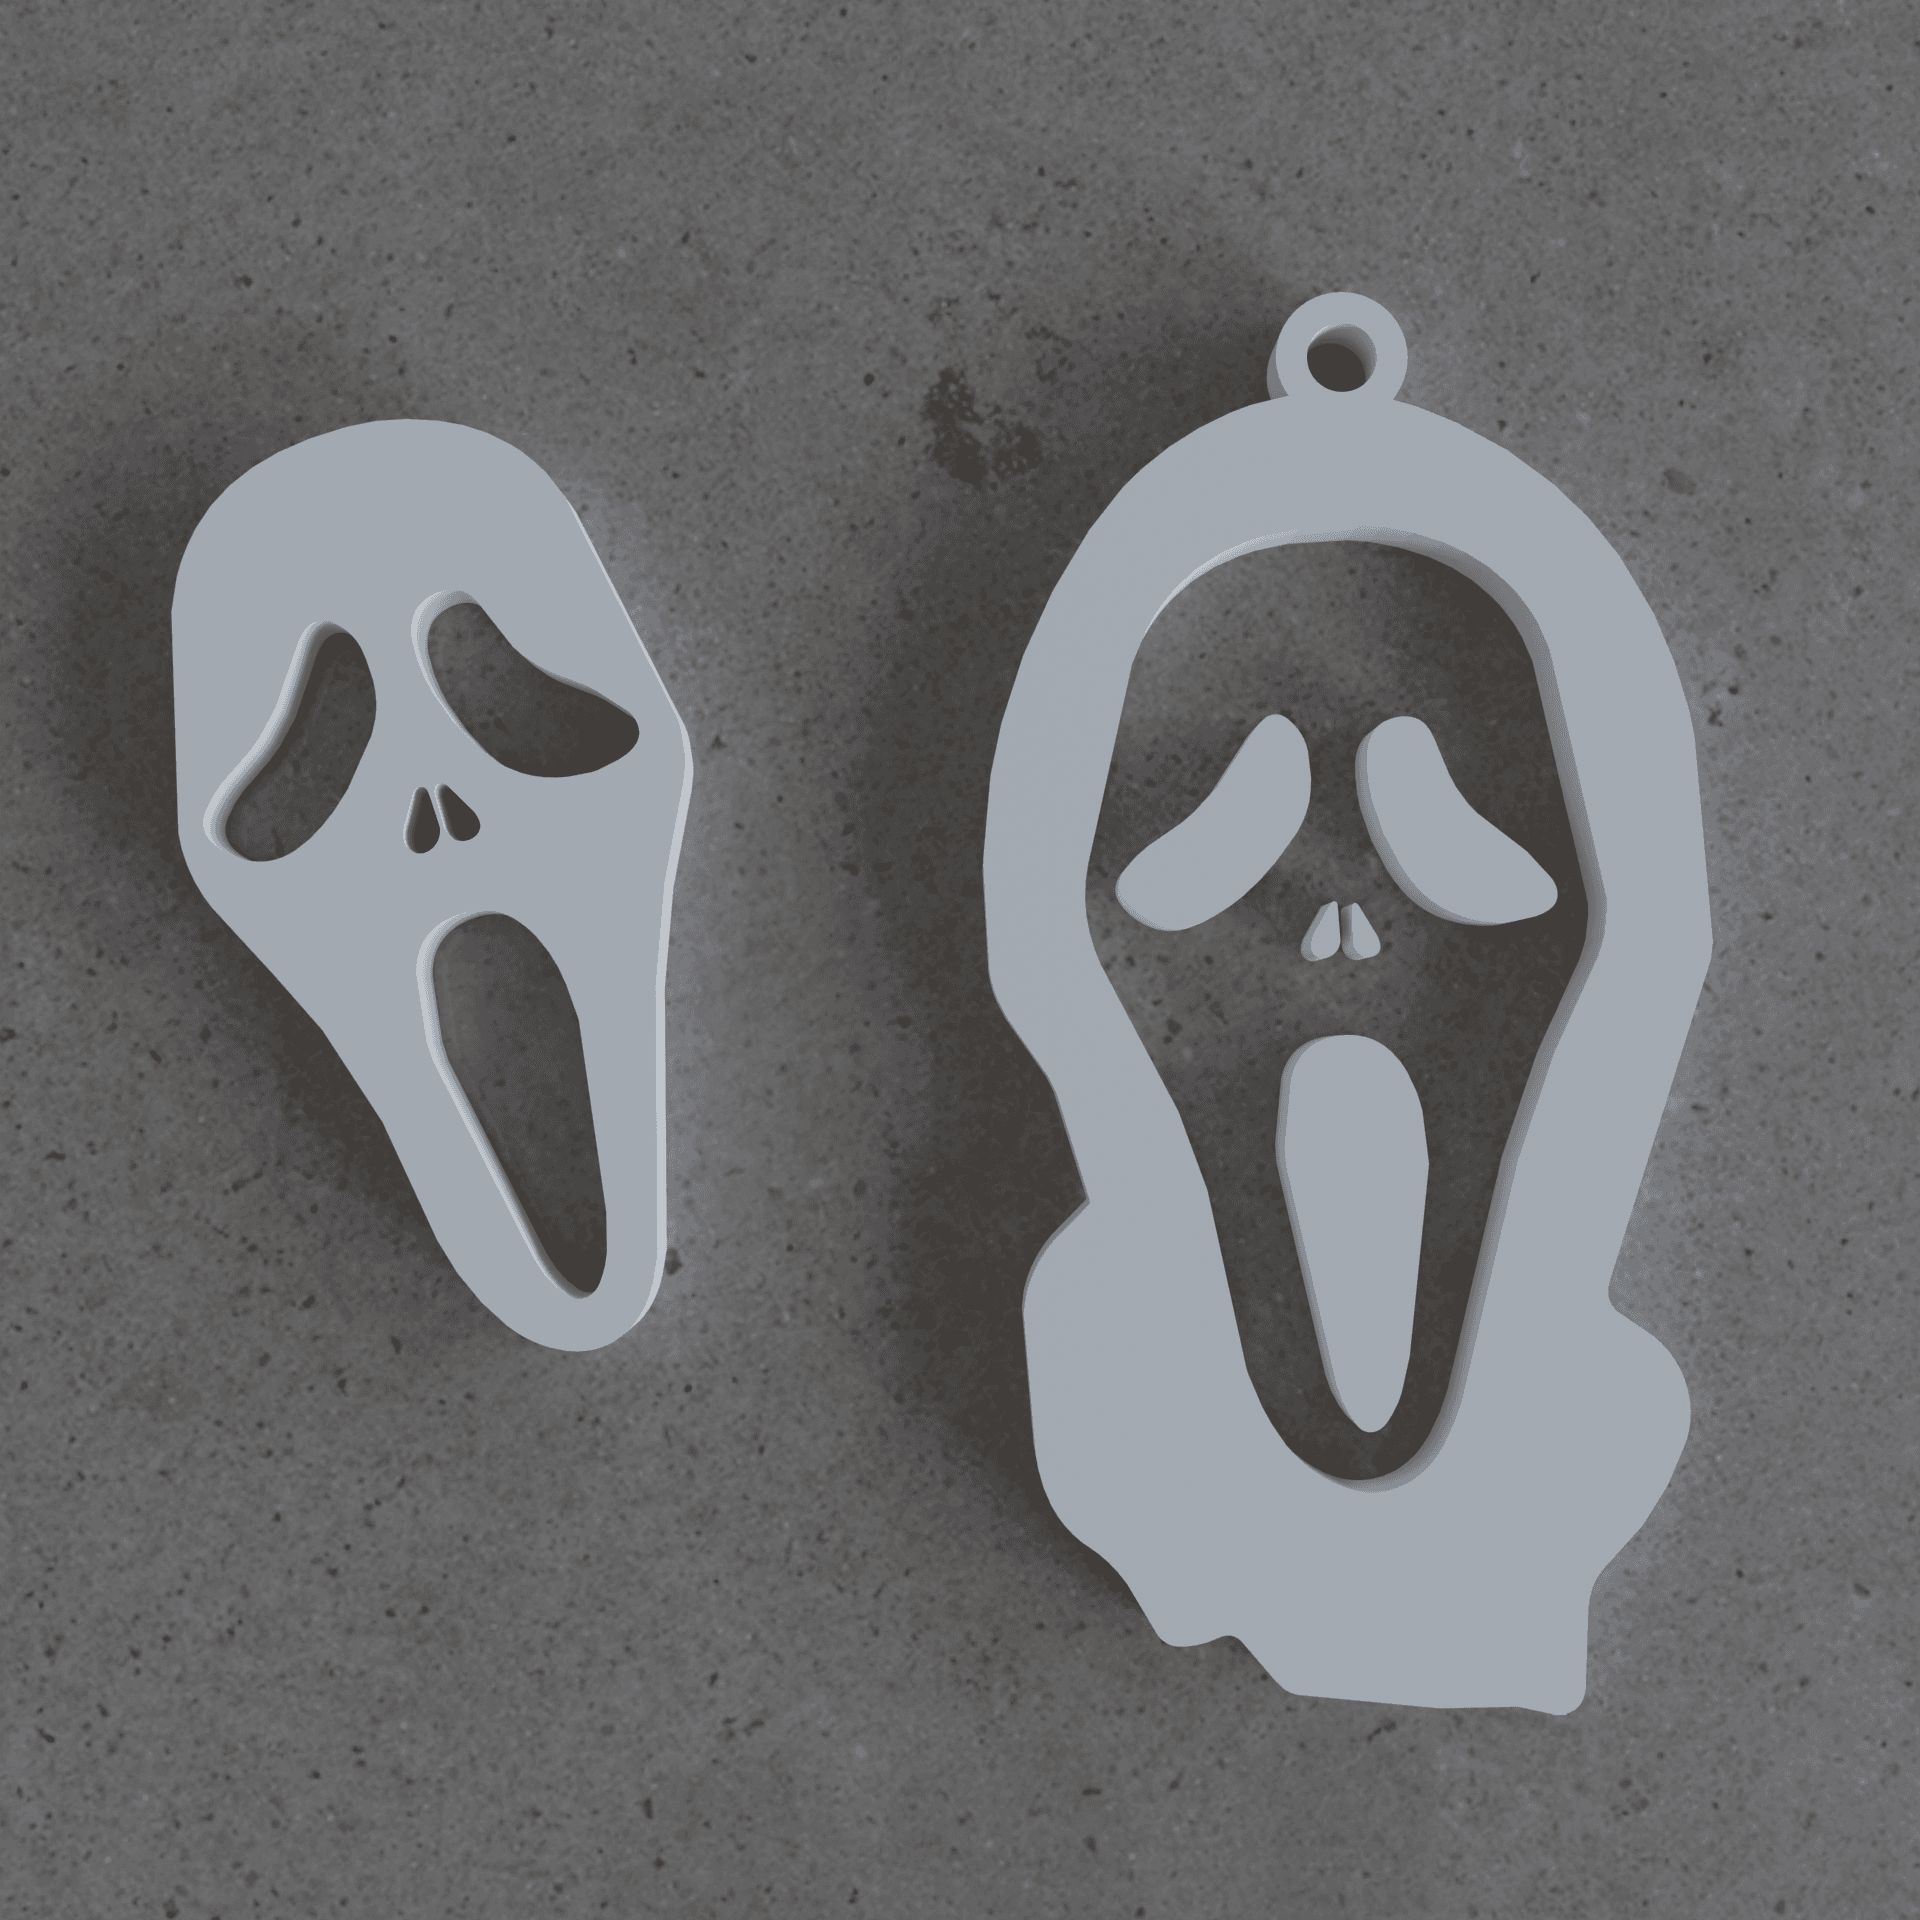 Ghostface keychain 3d model